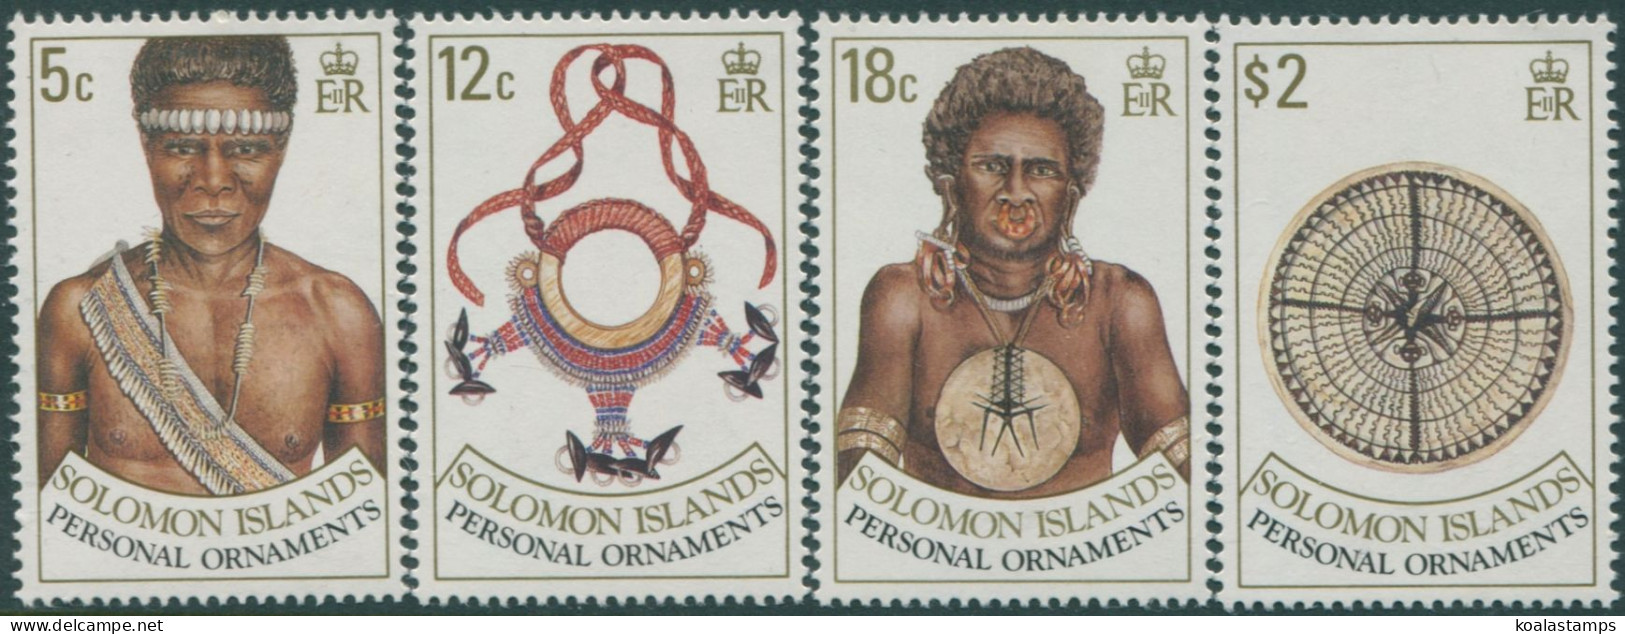 Solomon Islands 1990 SG666-669 Personal Ornaments Set MNH - Islas Salomón (1978-...)